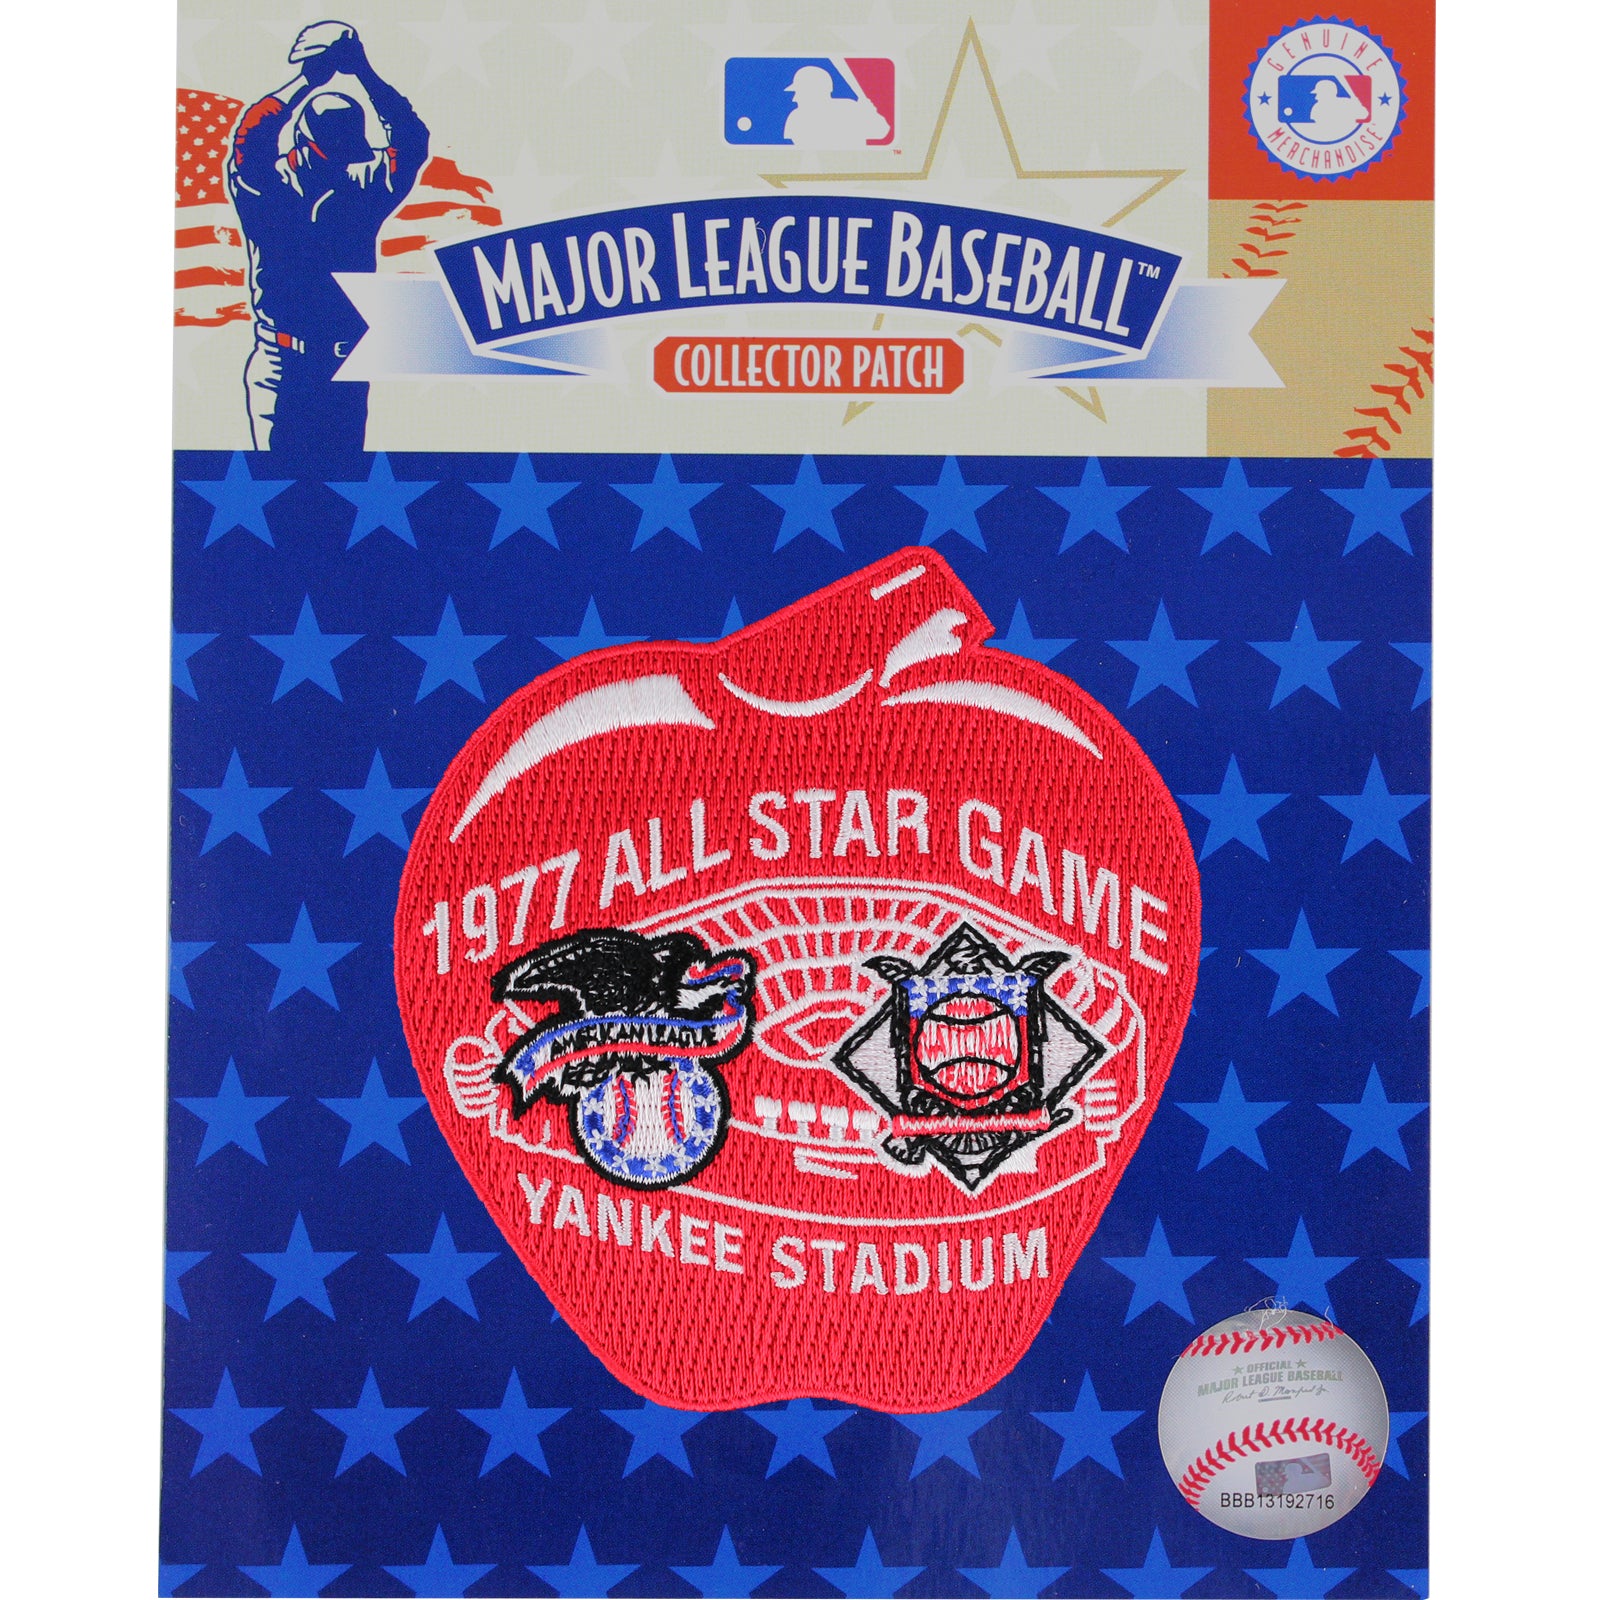 1977 MLB All Star Game New York Yankees Stadium Jersey Patch 